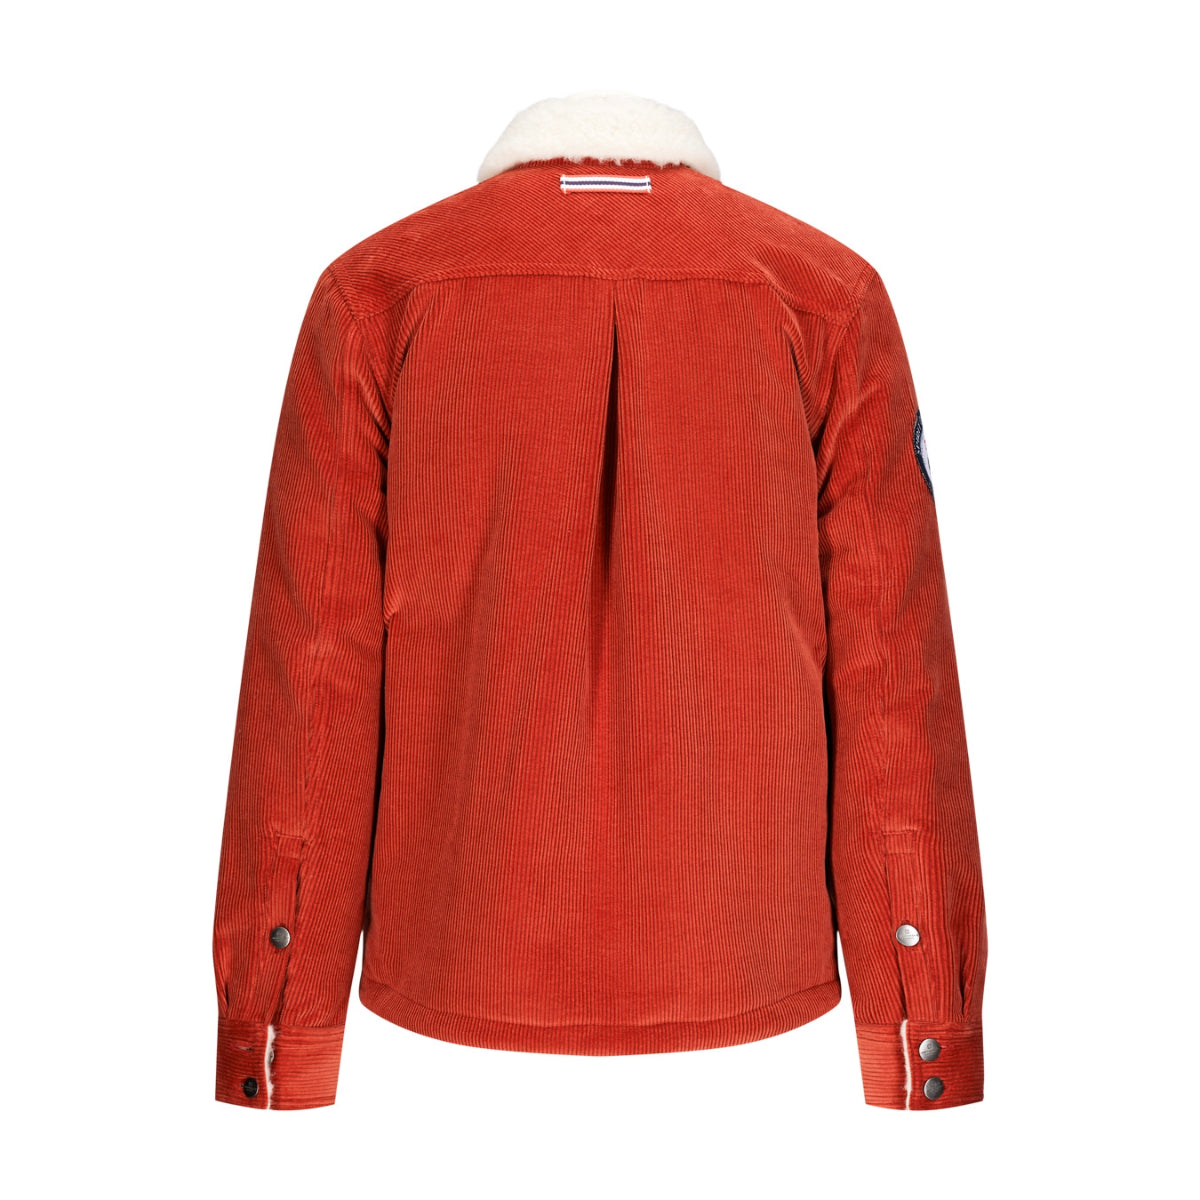 Amundsen Sports - Unisex Harvester Overshirt - Burnt Red